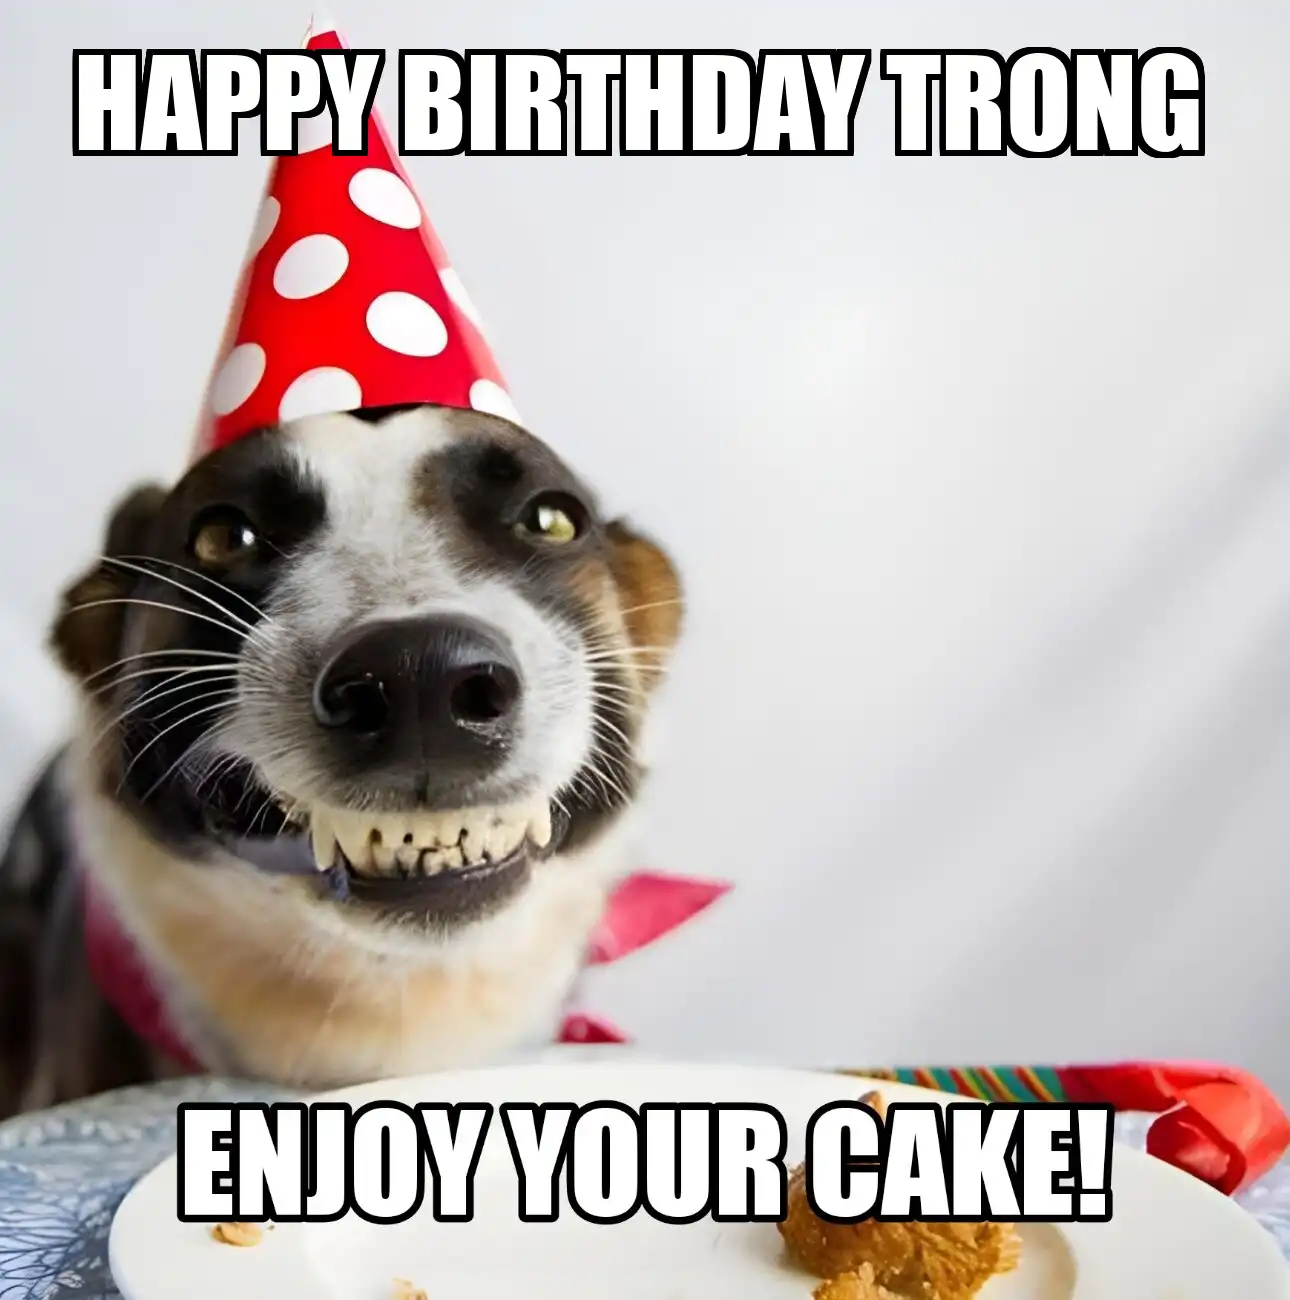 Happy Birthday Trong Enjoy Your Cake Dog Meme